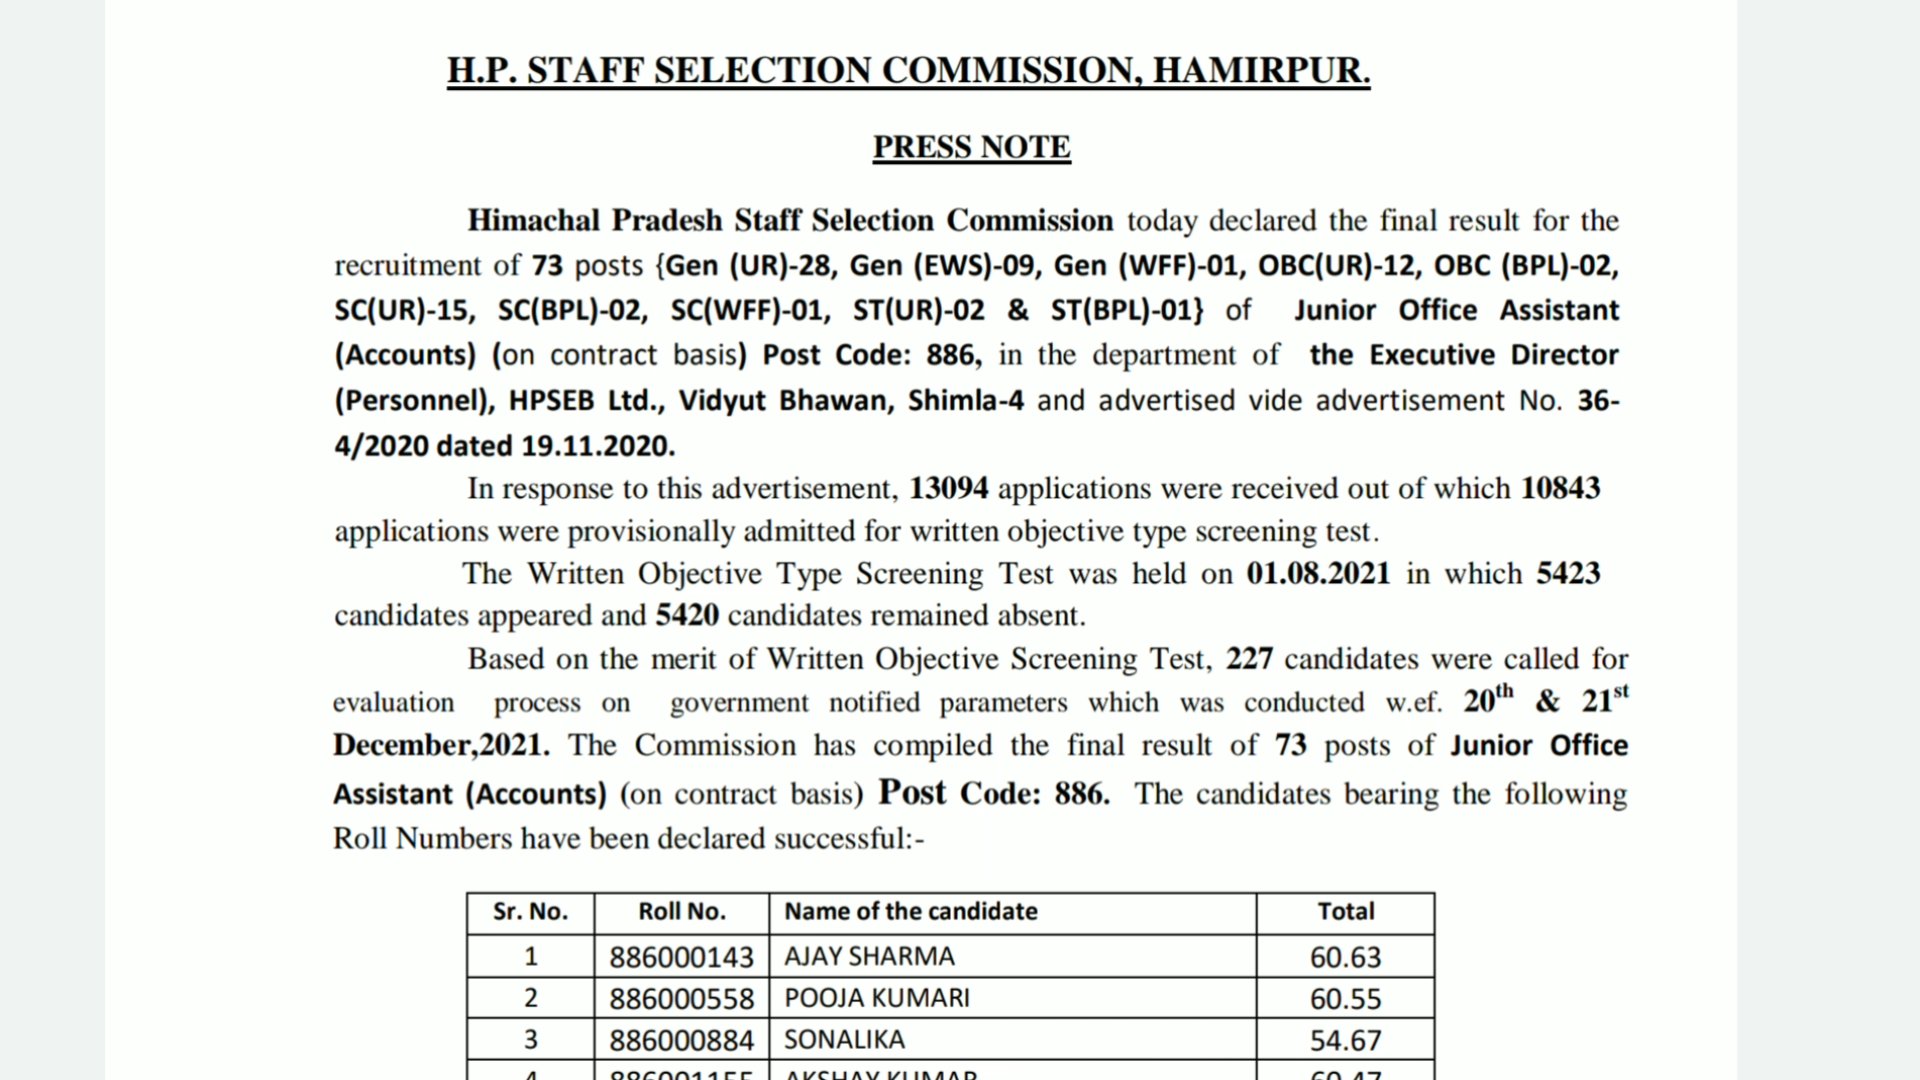 HPSSC Hamirpur JOA Accounts 886 Post Code Final Result